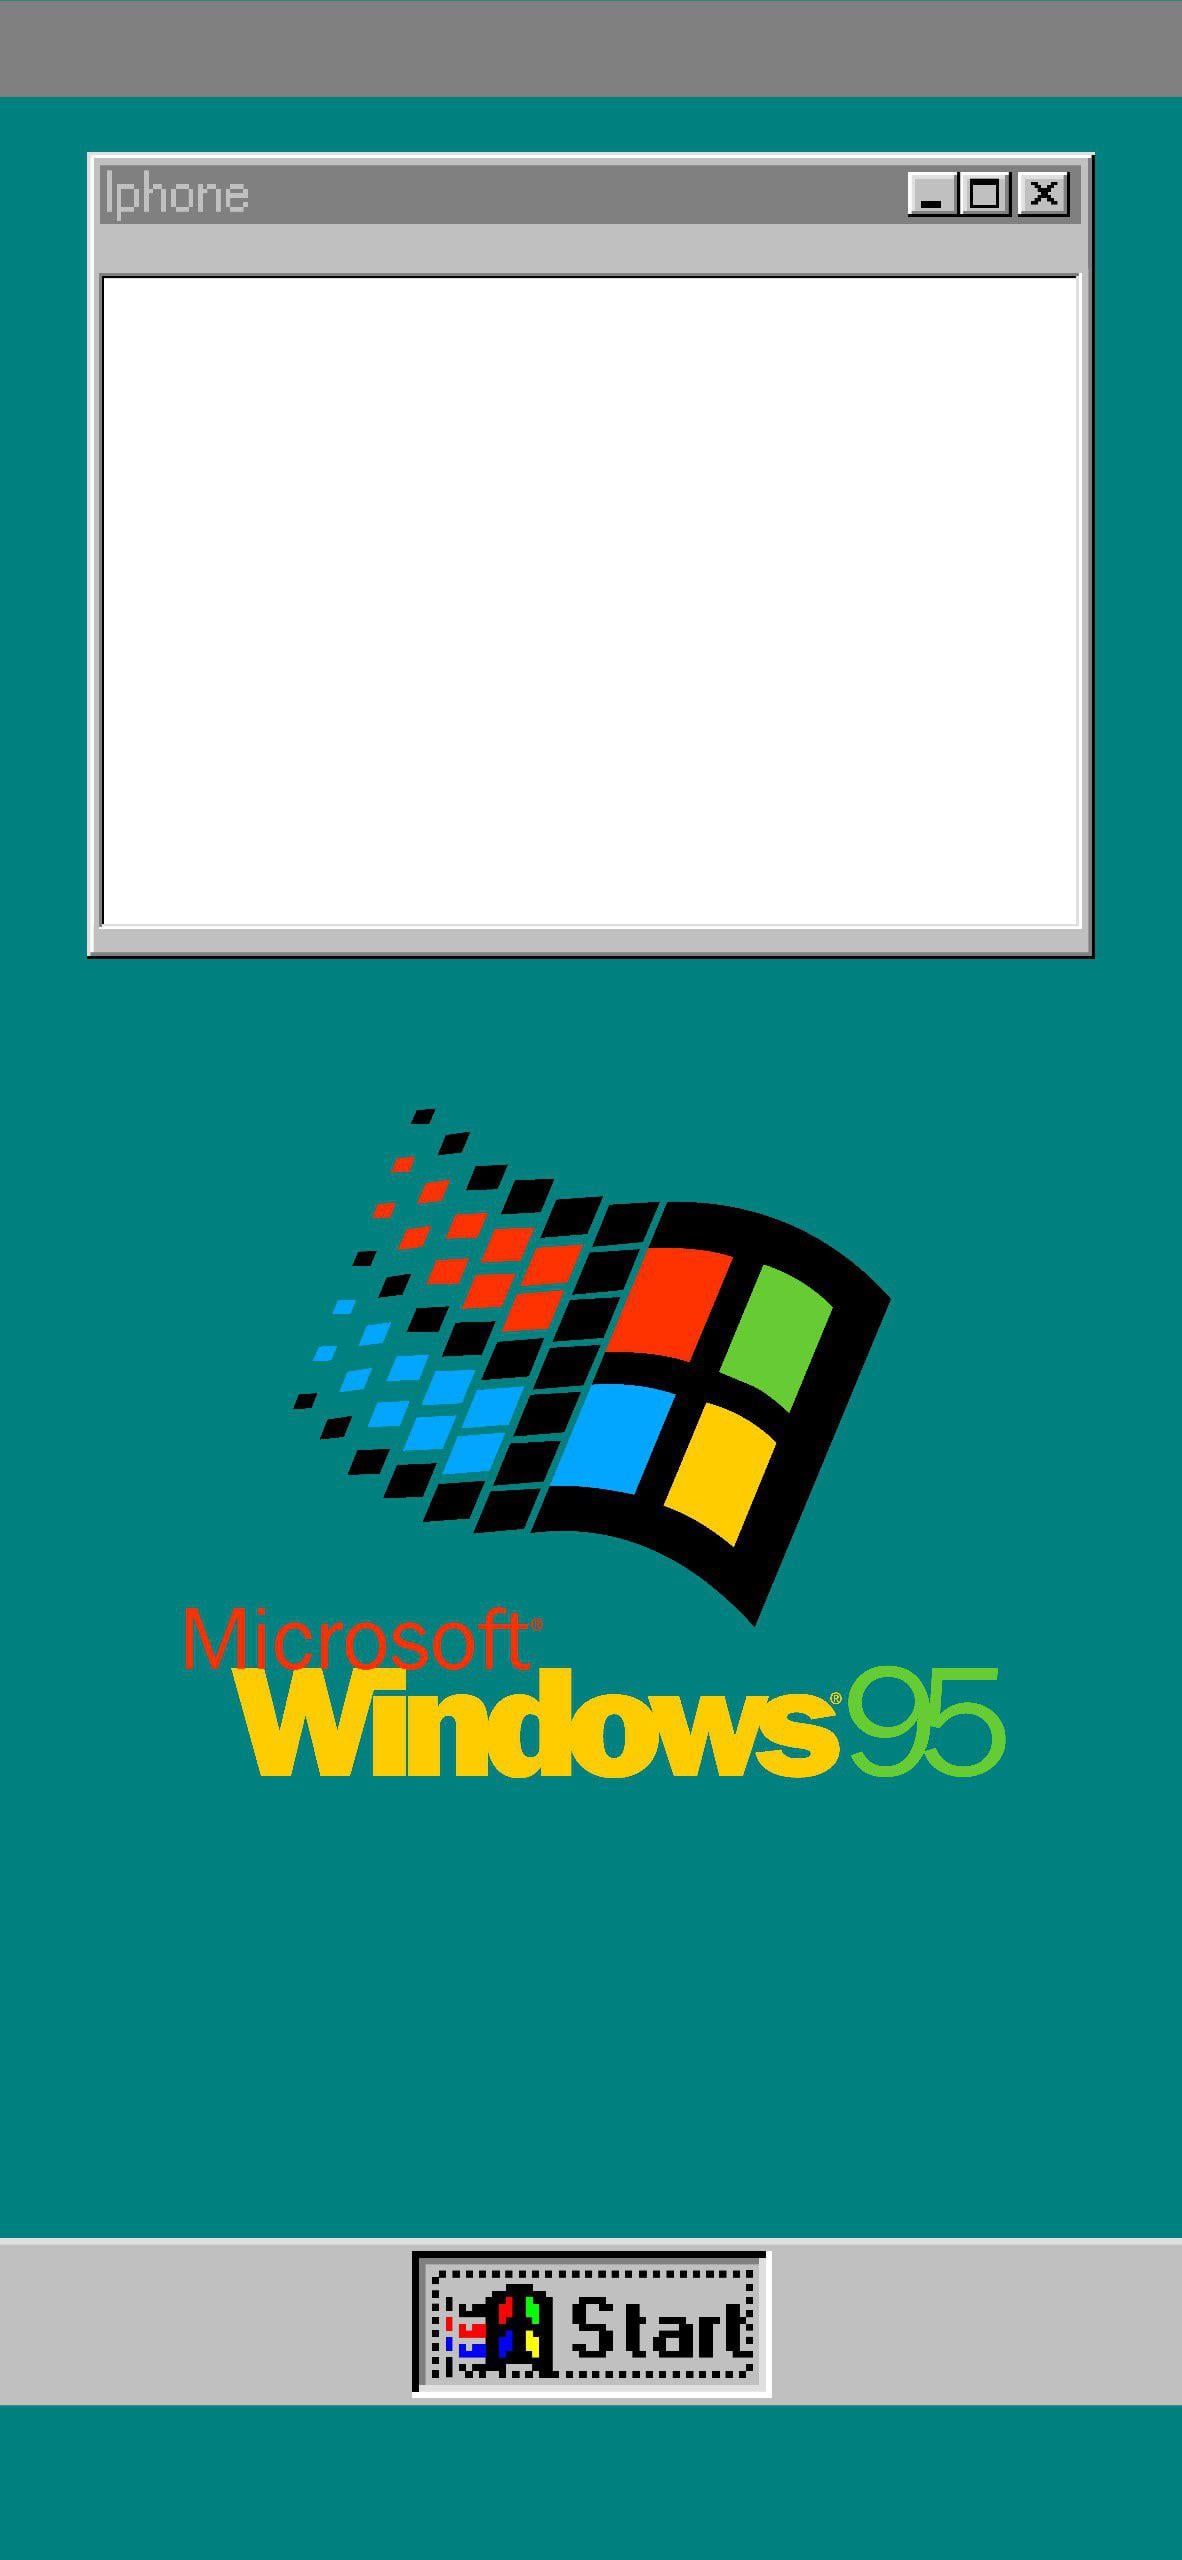 Windows 95 wallpaper I made. (iPhone XR)